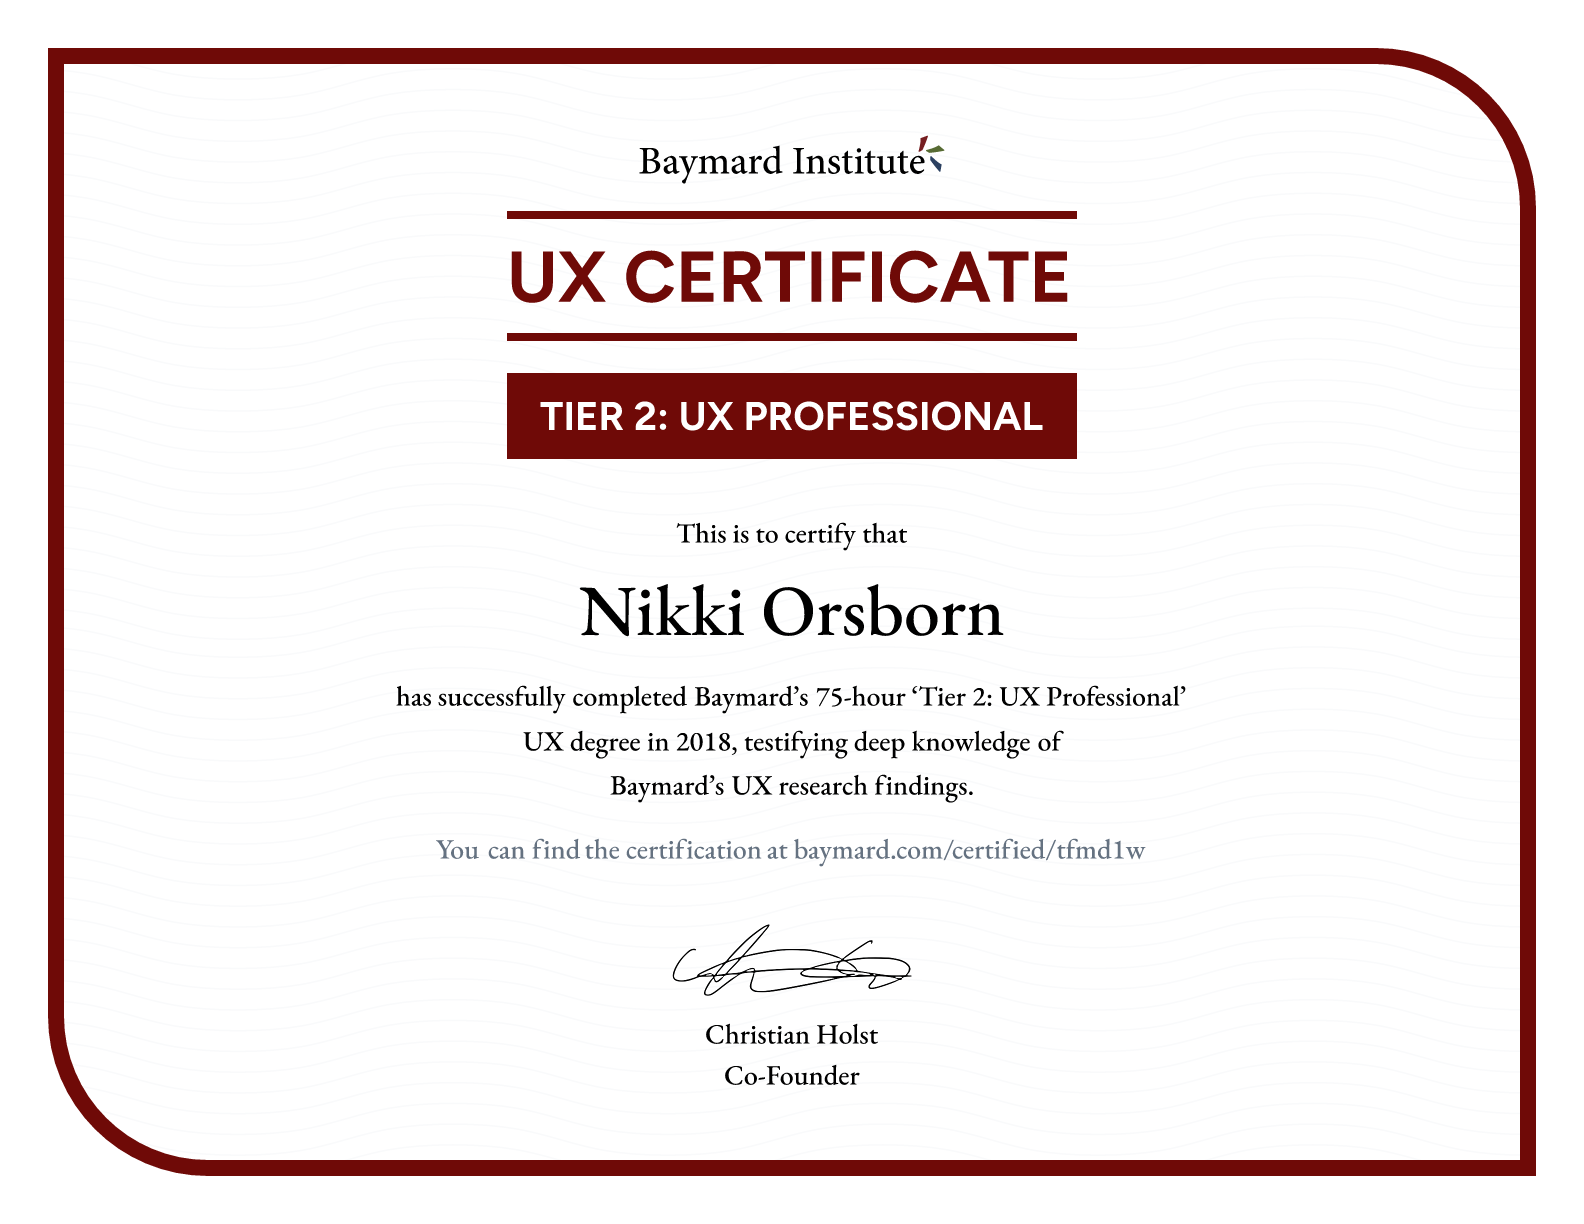 Nikki Orsborn’s certificate